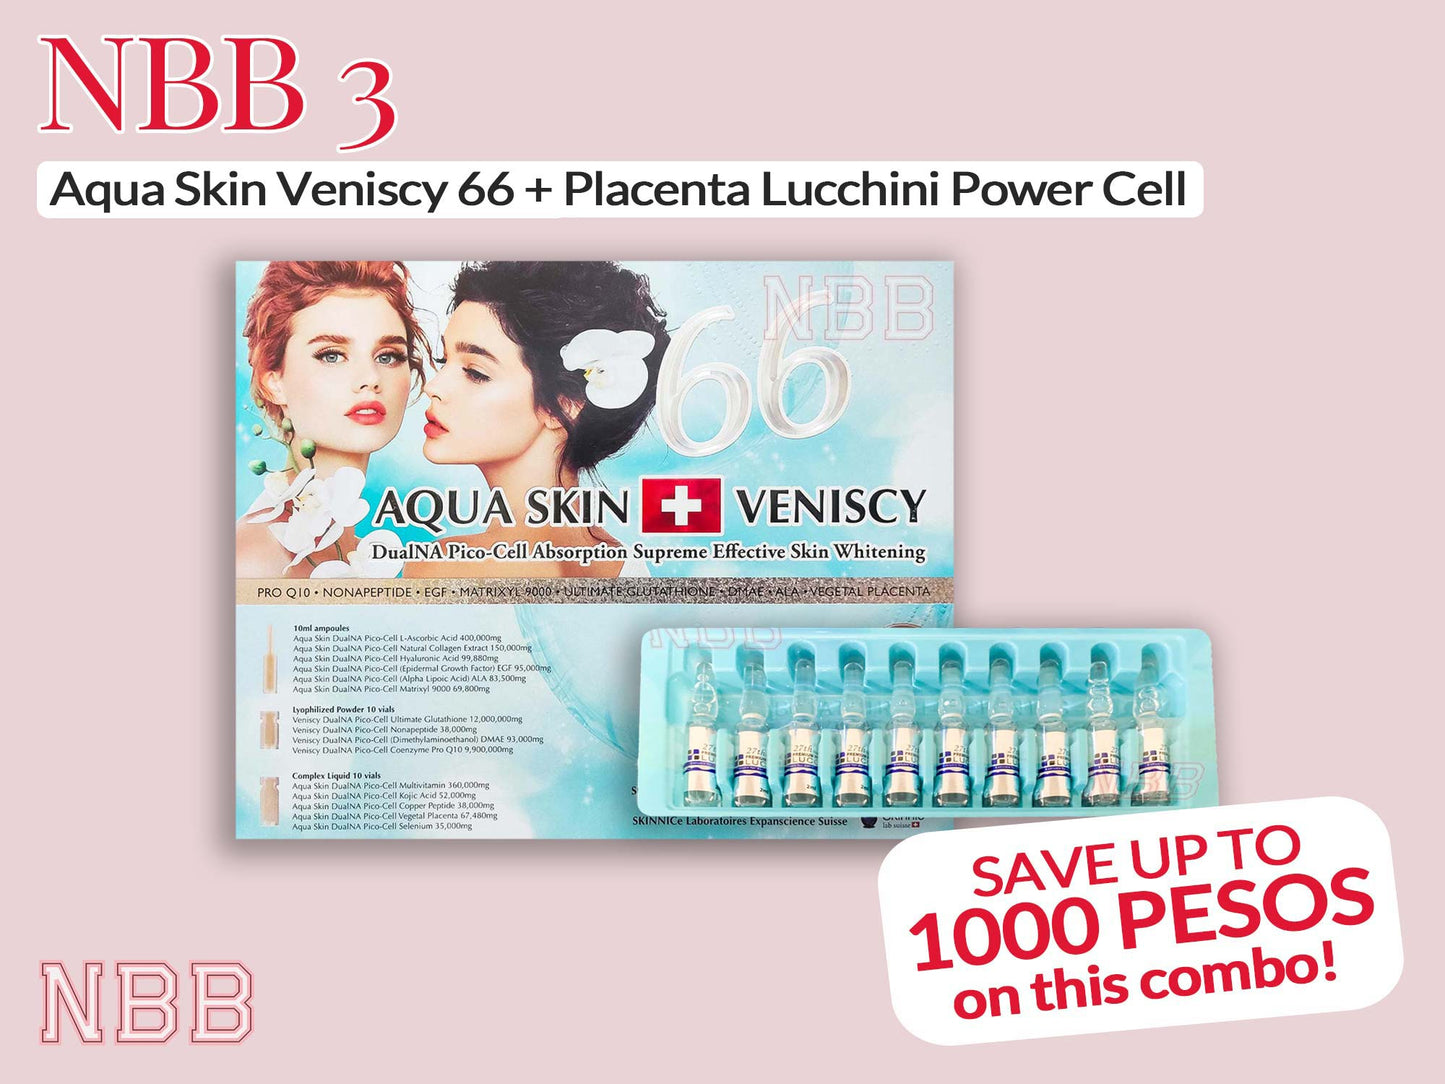 Aqua Skin Veniscy 66 + Placenta Lucchini Powercell